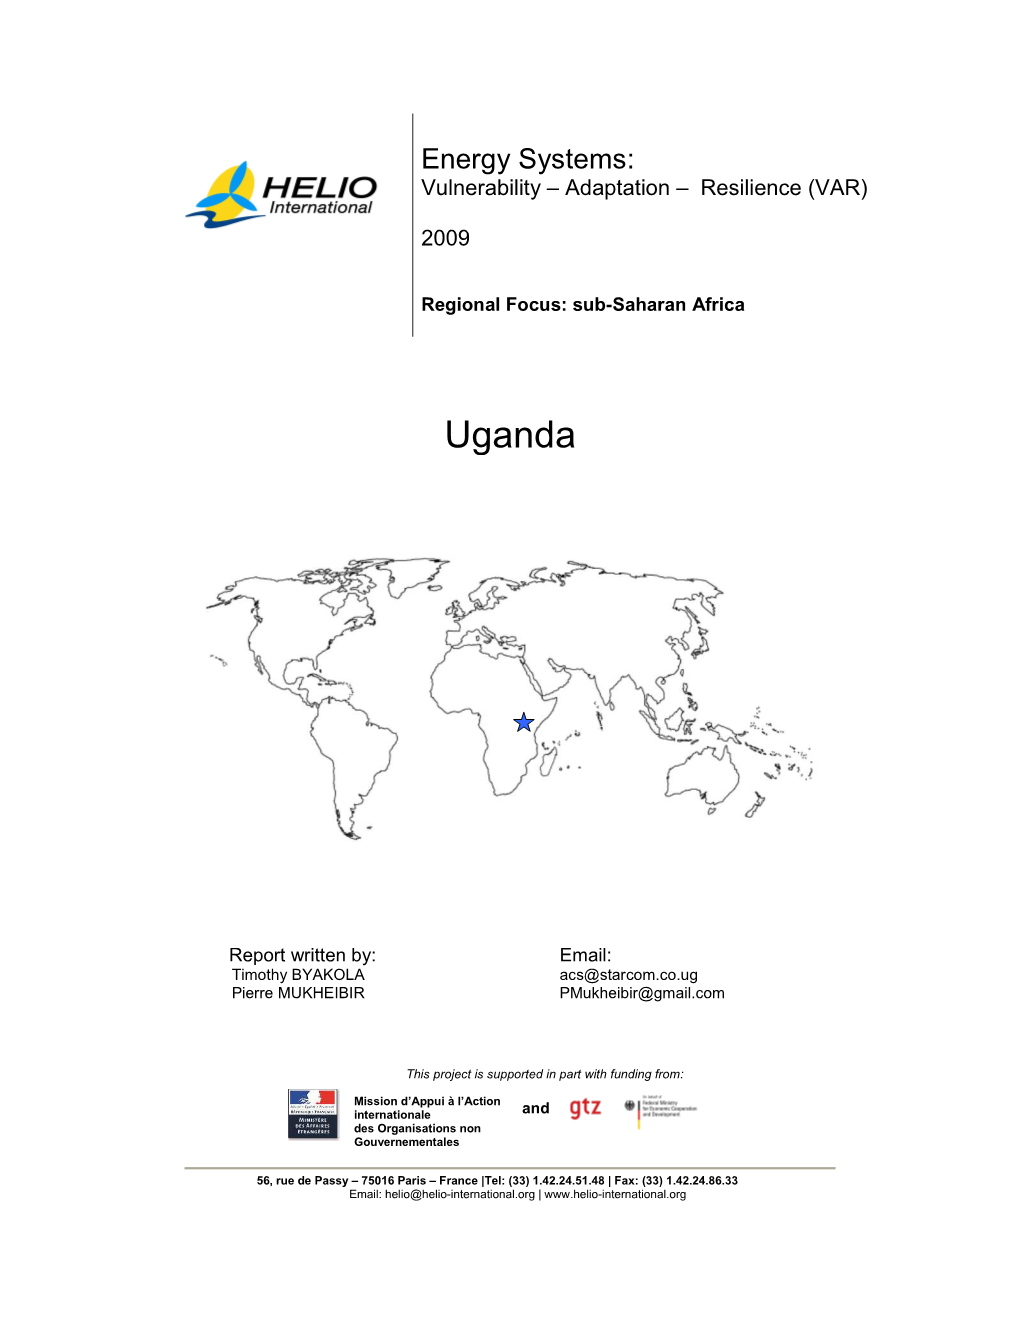 Var Energy Systems in Uganda (2009)